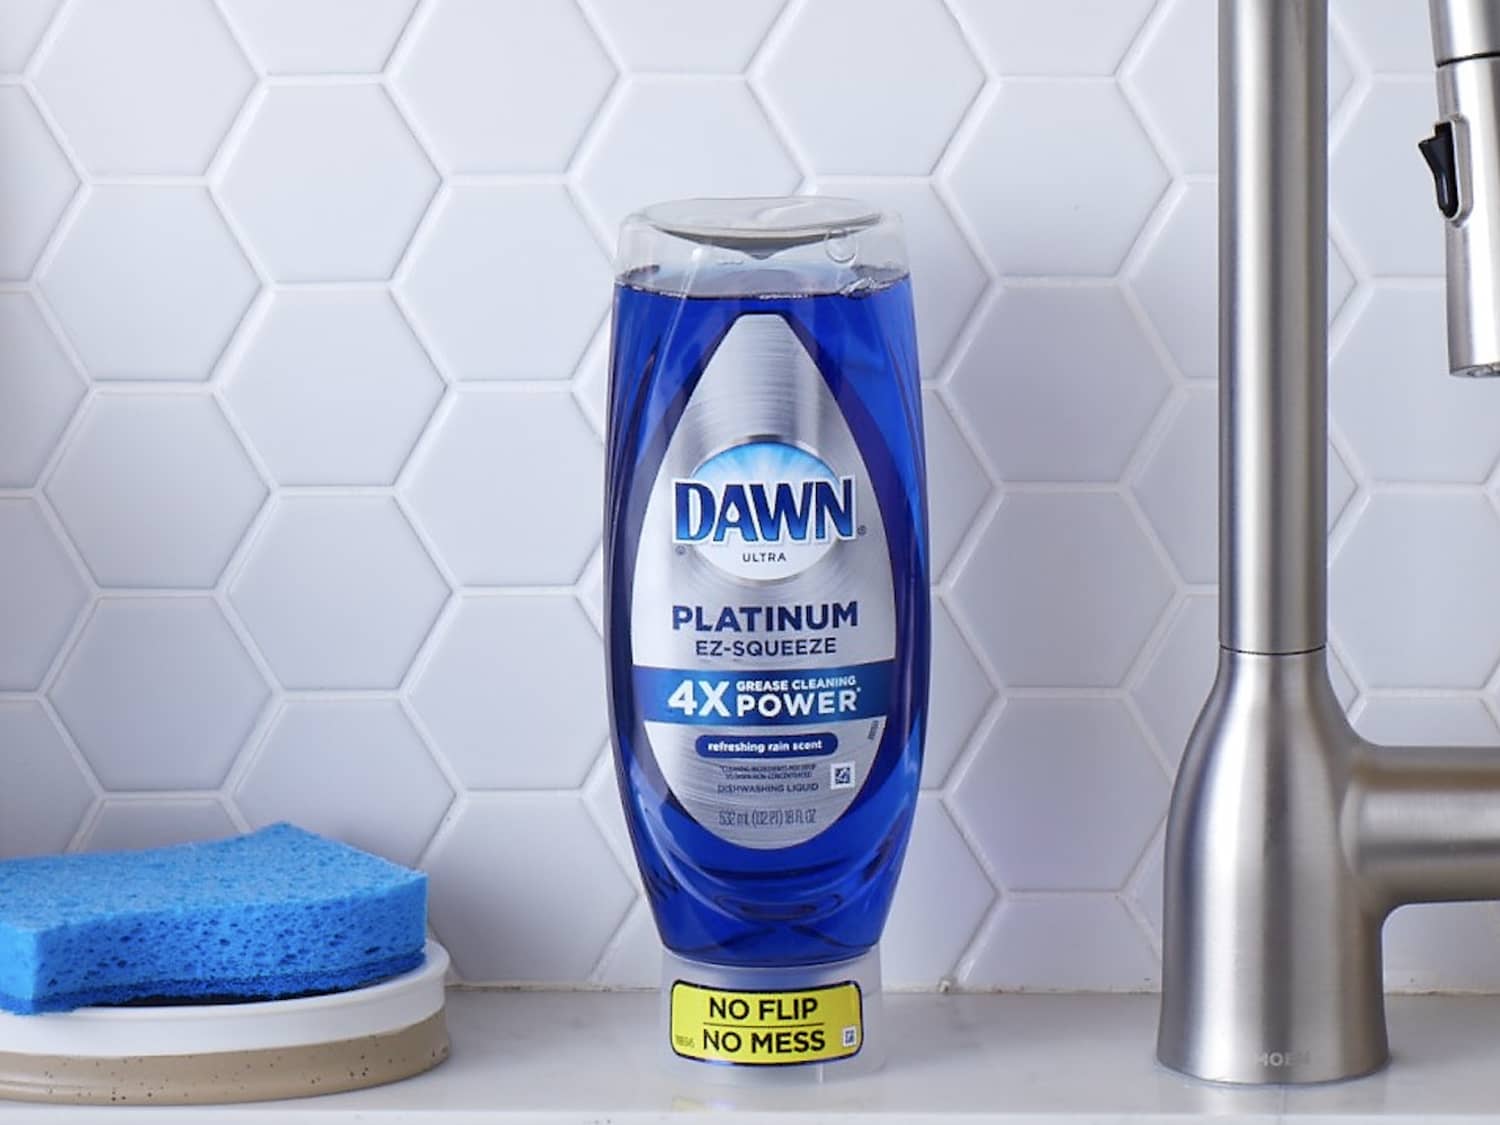 Dawn Powerwash Dish Soap Review 2021